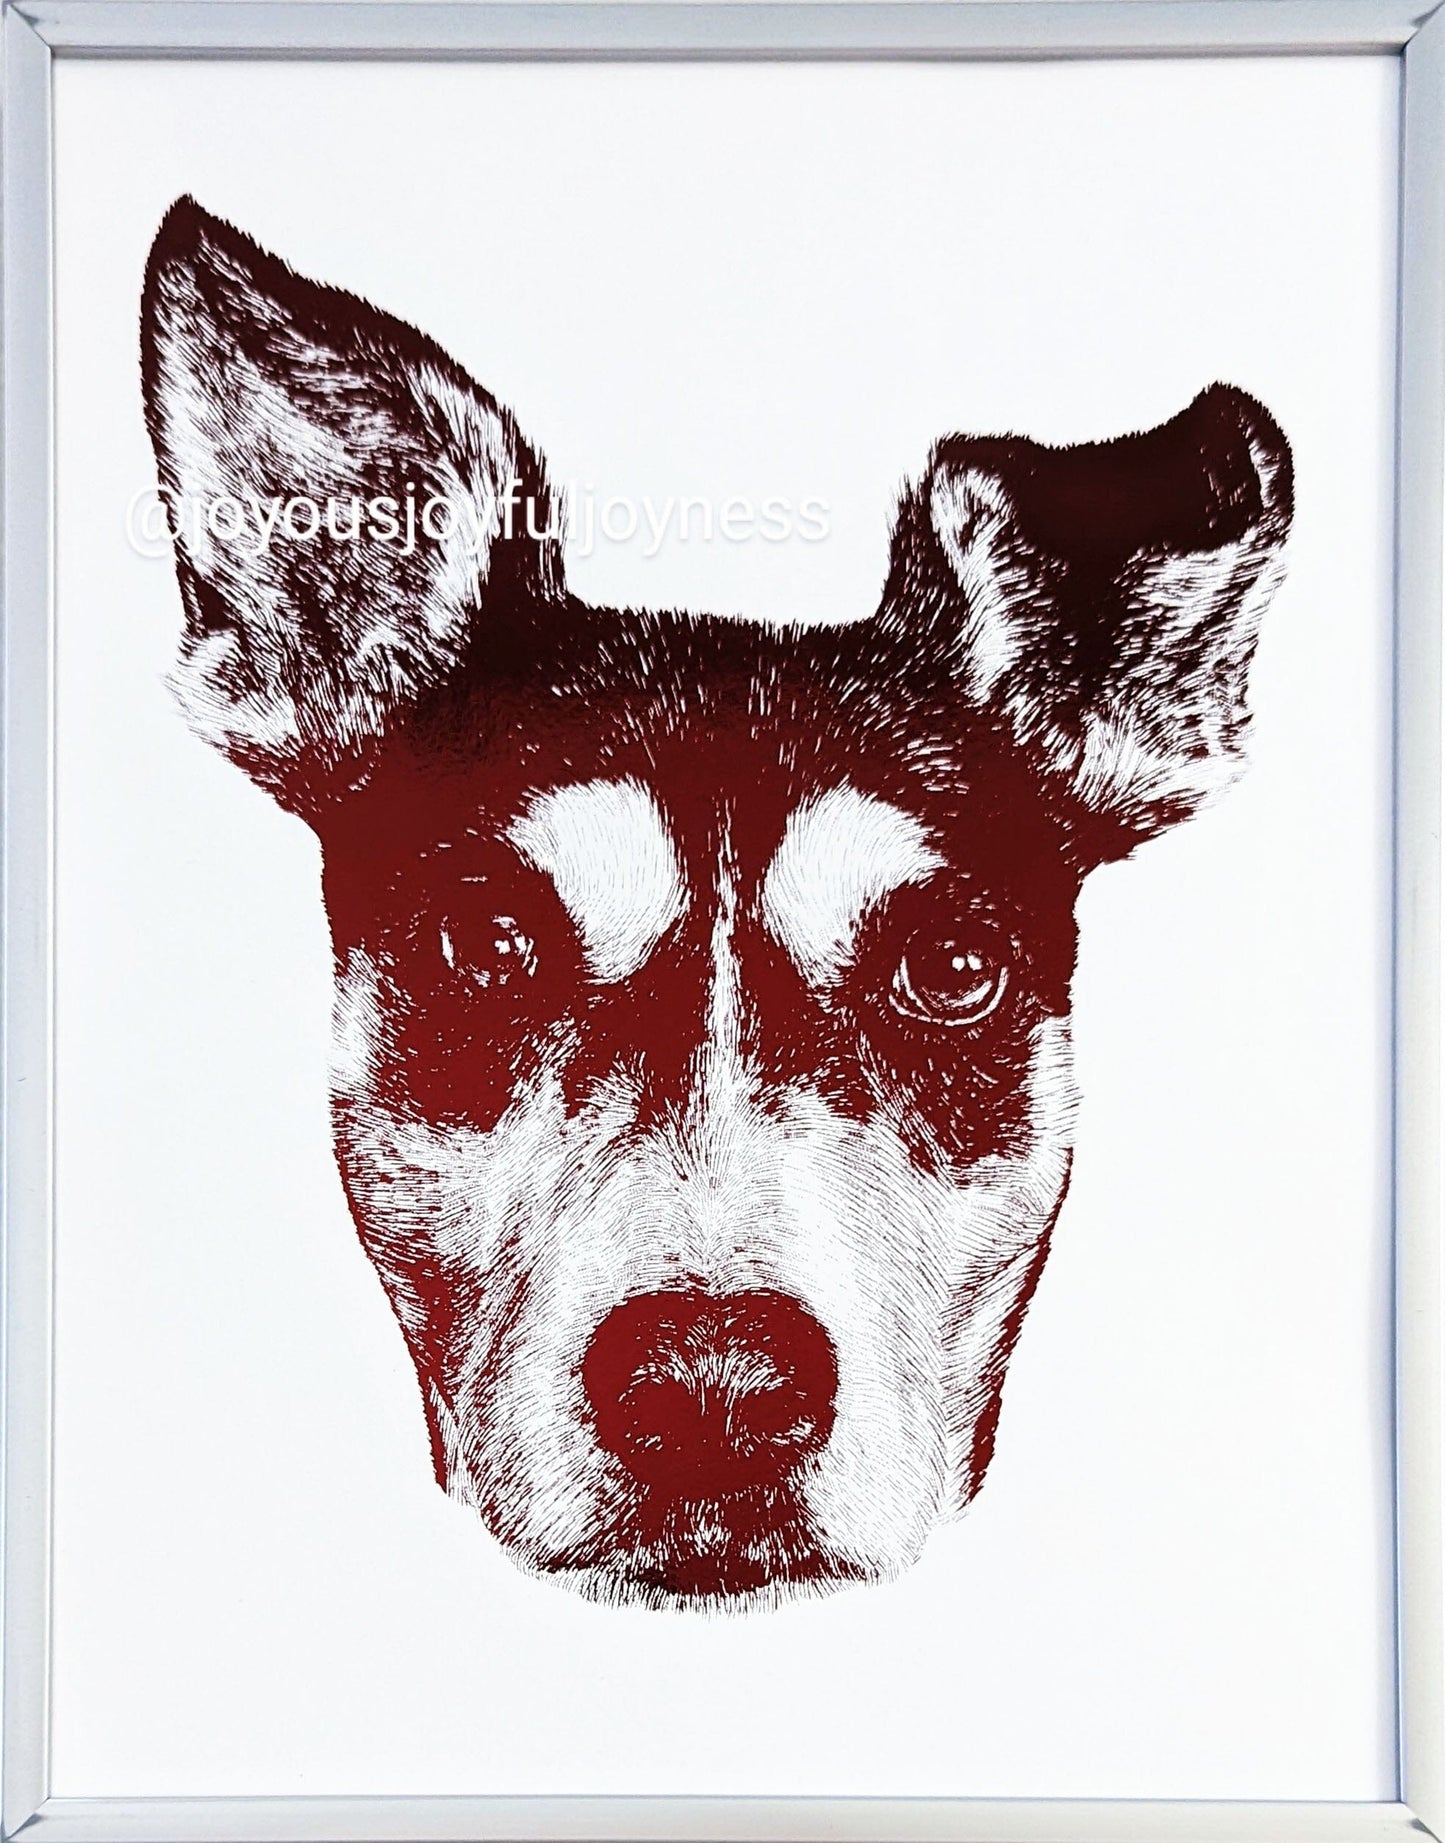 Handmade Puppy Portraits Posters, Prints, & Visual Artwork JoyousJoyfulJoyness 